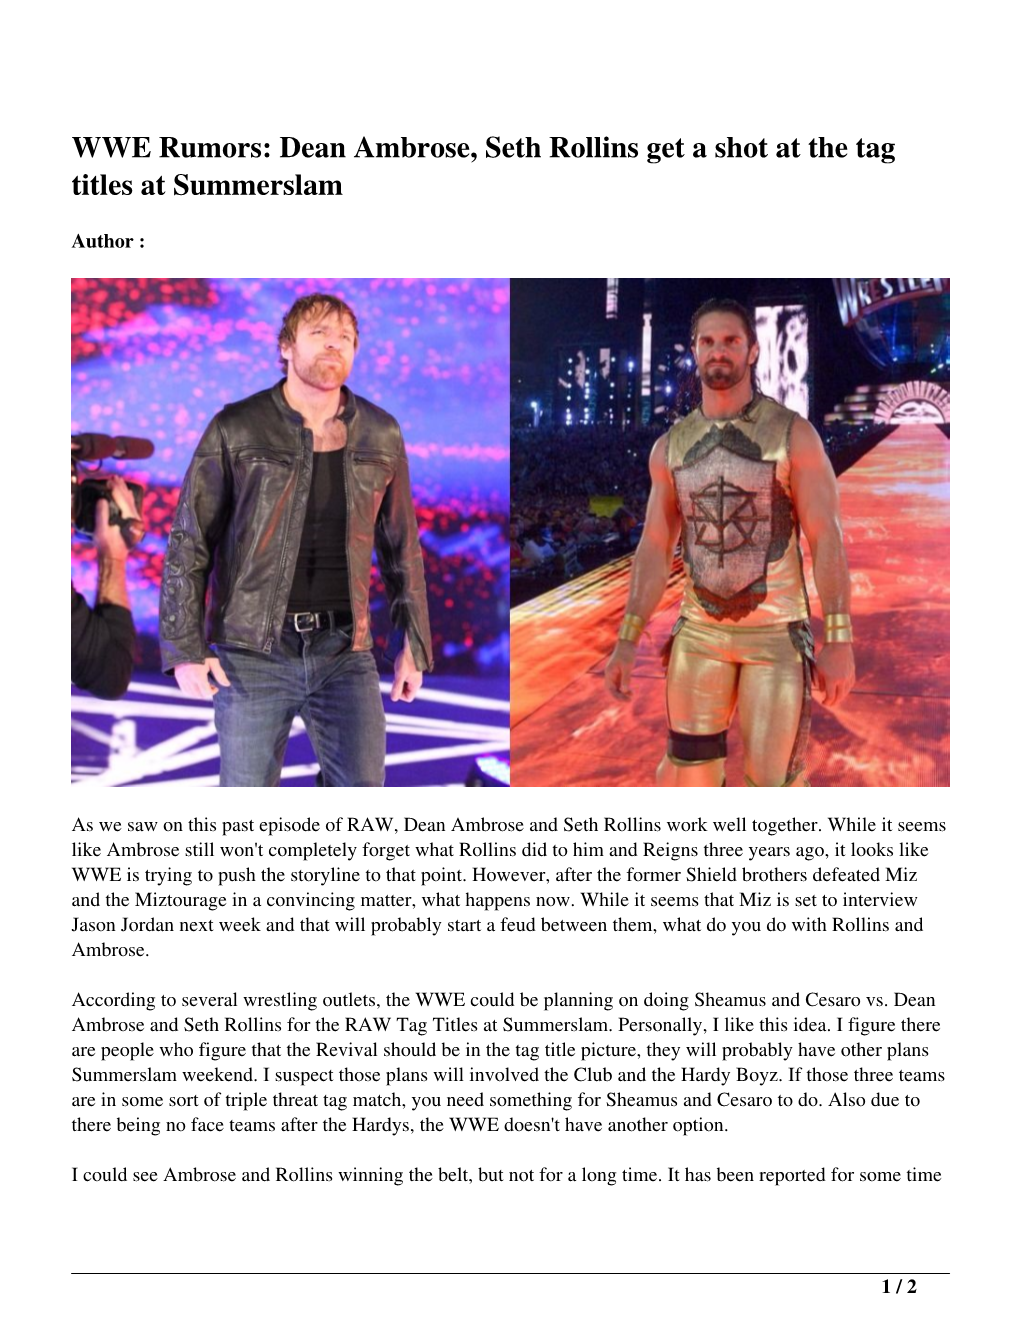 WWE Rumors: Dean Ambrose, Seth Rollins Get a Shot at the Tag Titles at Summerslam